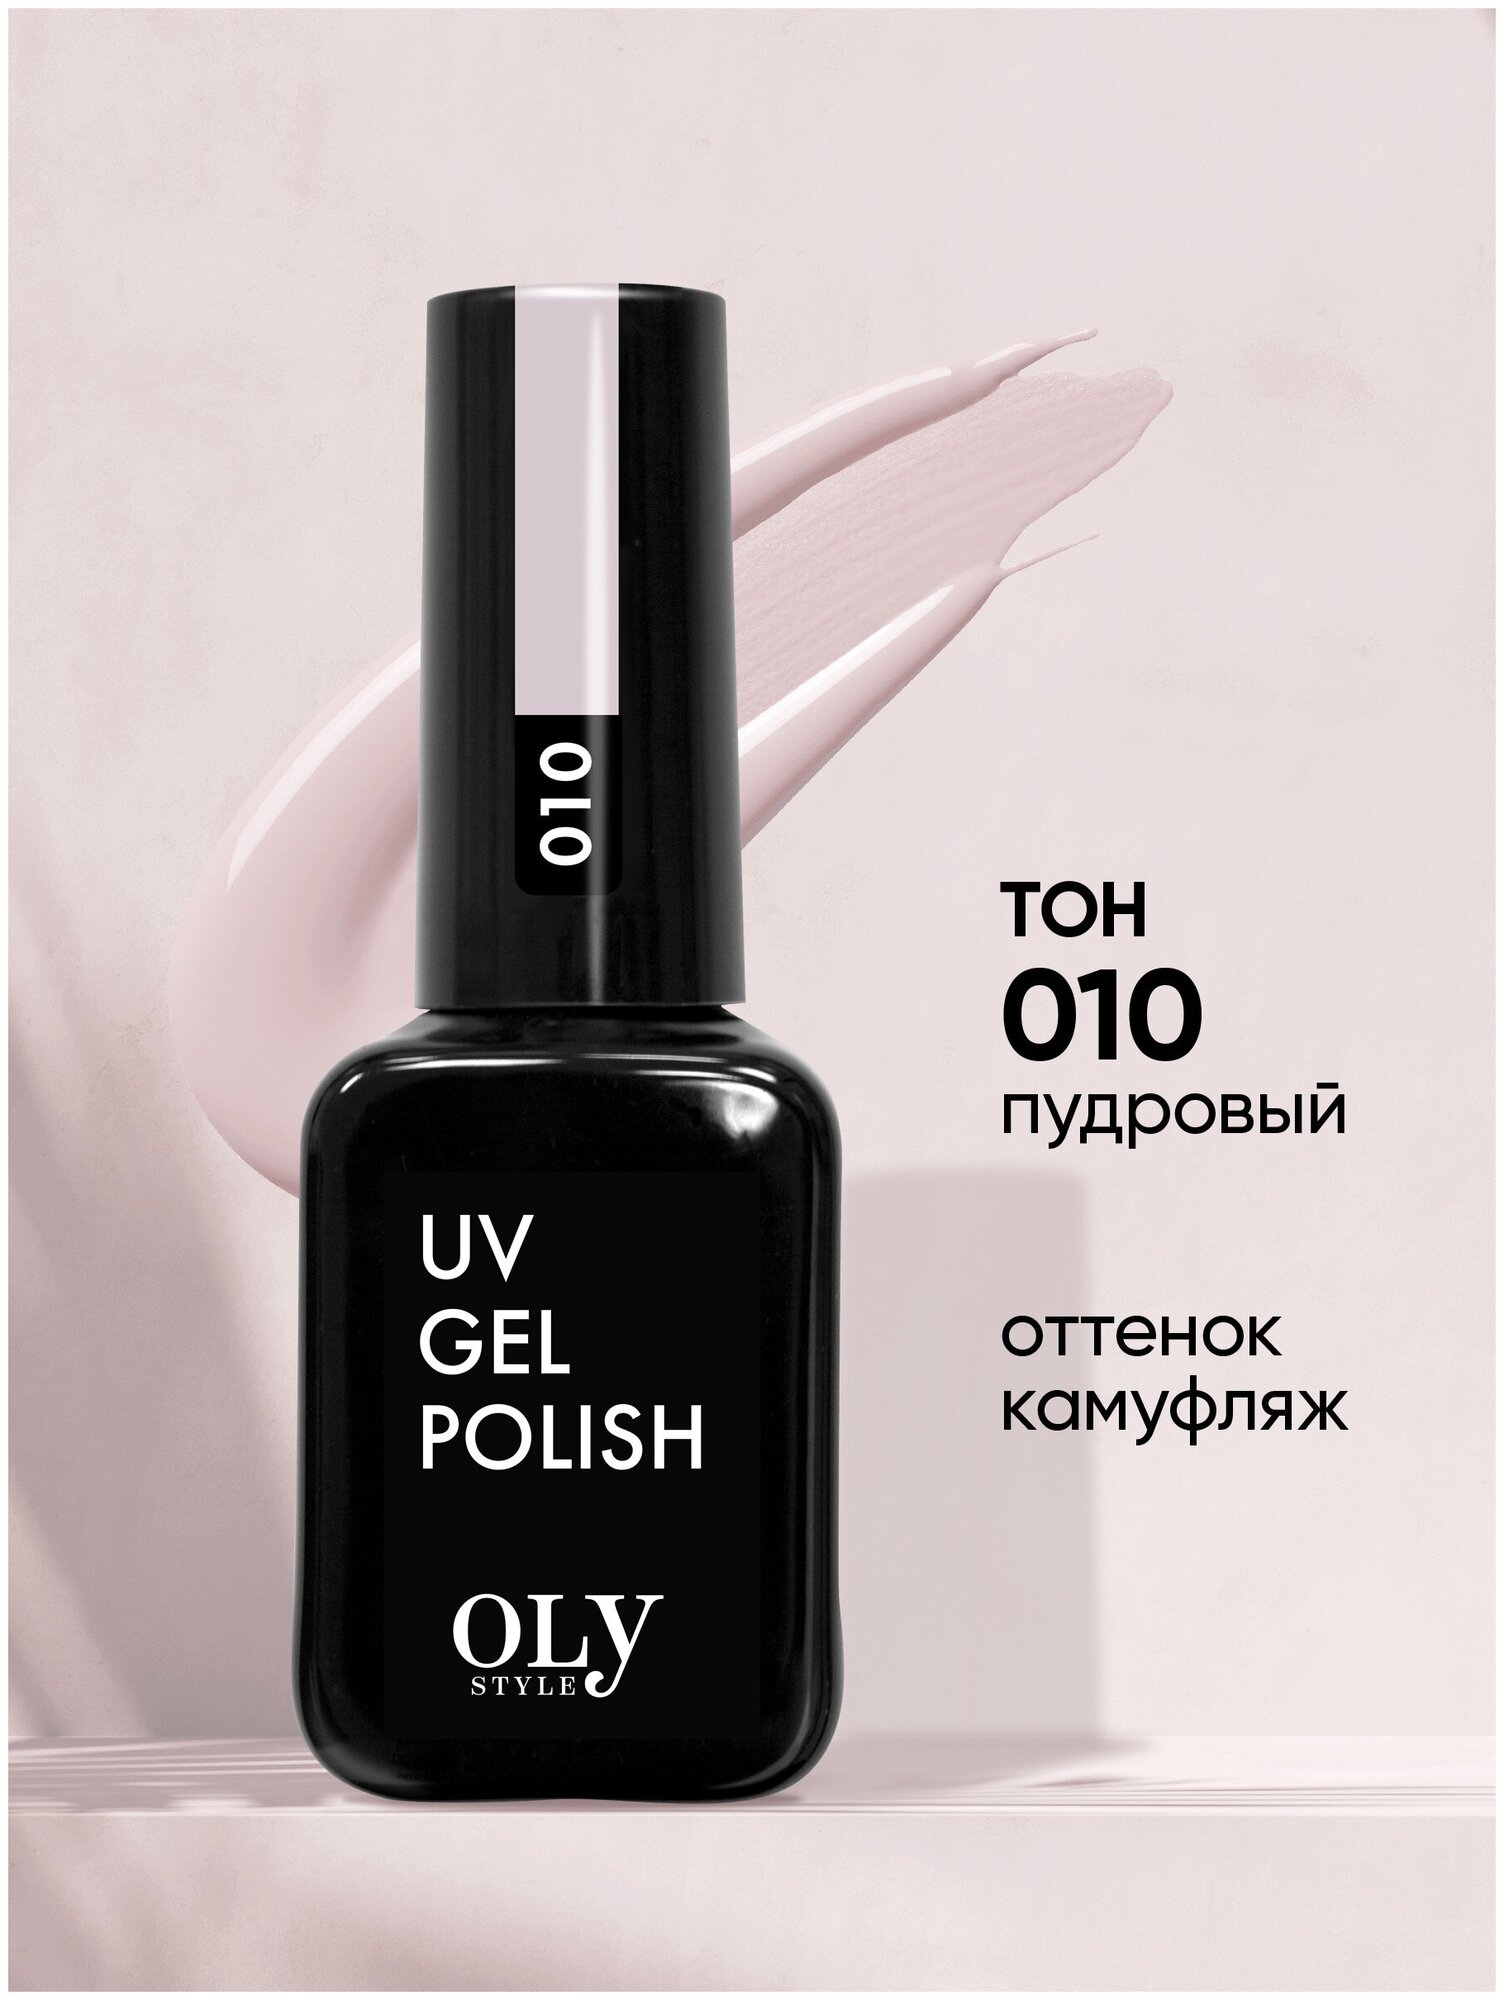 Olystyle Гель-лак для ногтей OLS UV, тон 010 пудровый, 10мл